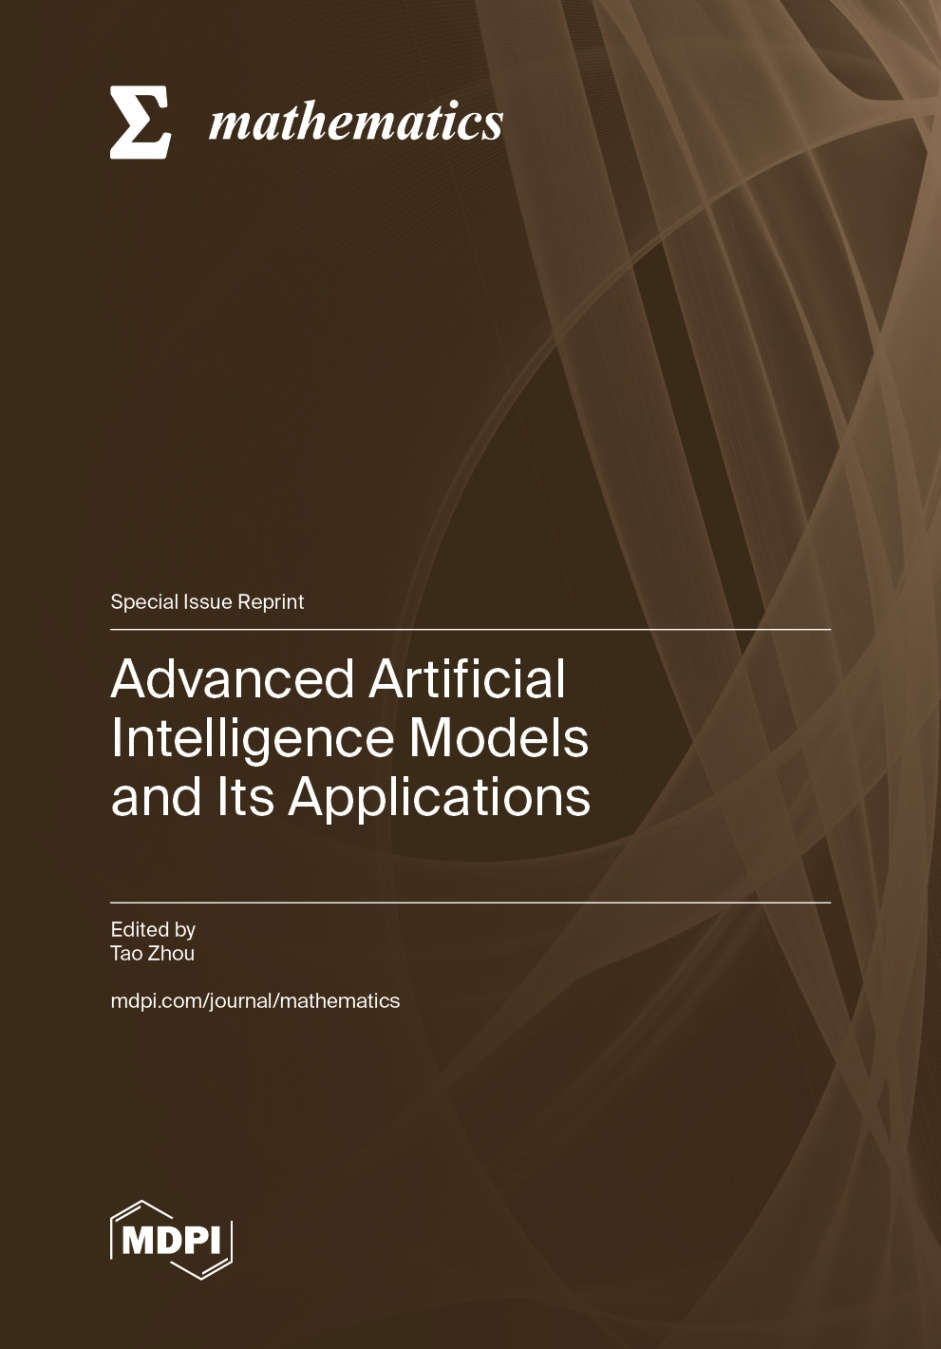 advanced artificial intelligence pdf Niche Utama Home Advanced Artificial Intelligence Models and Its Applications